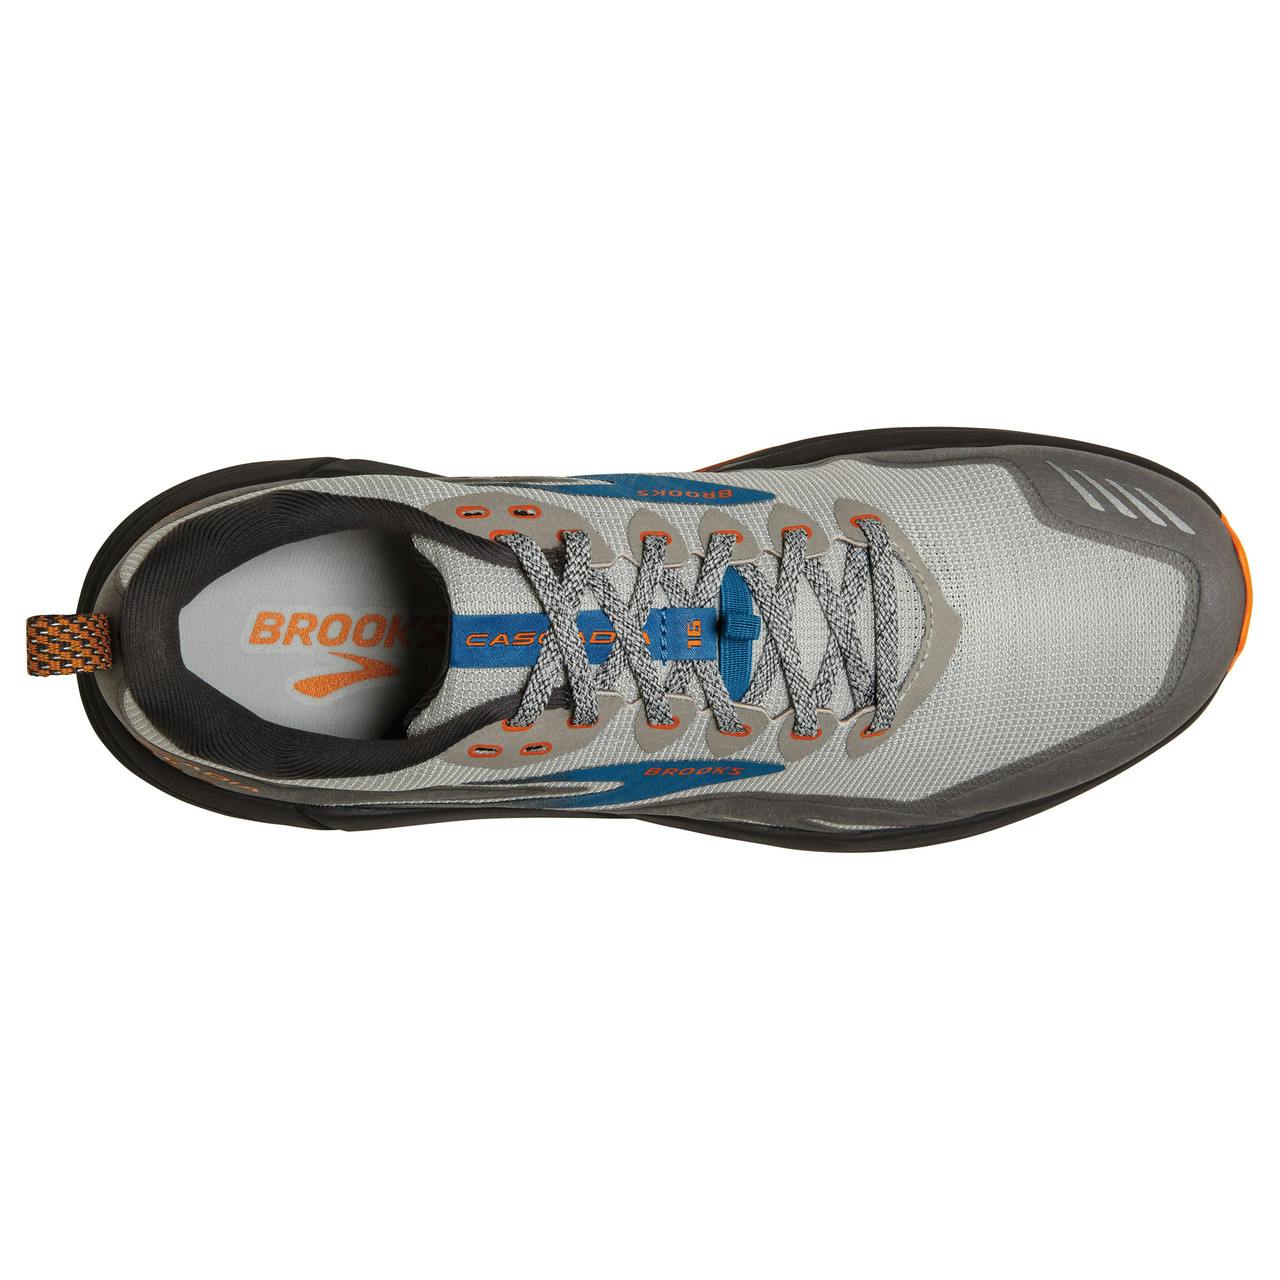 Cascadia 16 Trail Running Shoes Oyster Mushroom/Alloy/Ora